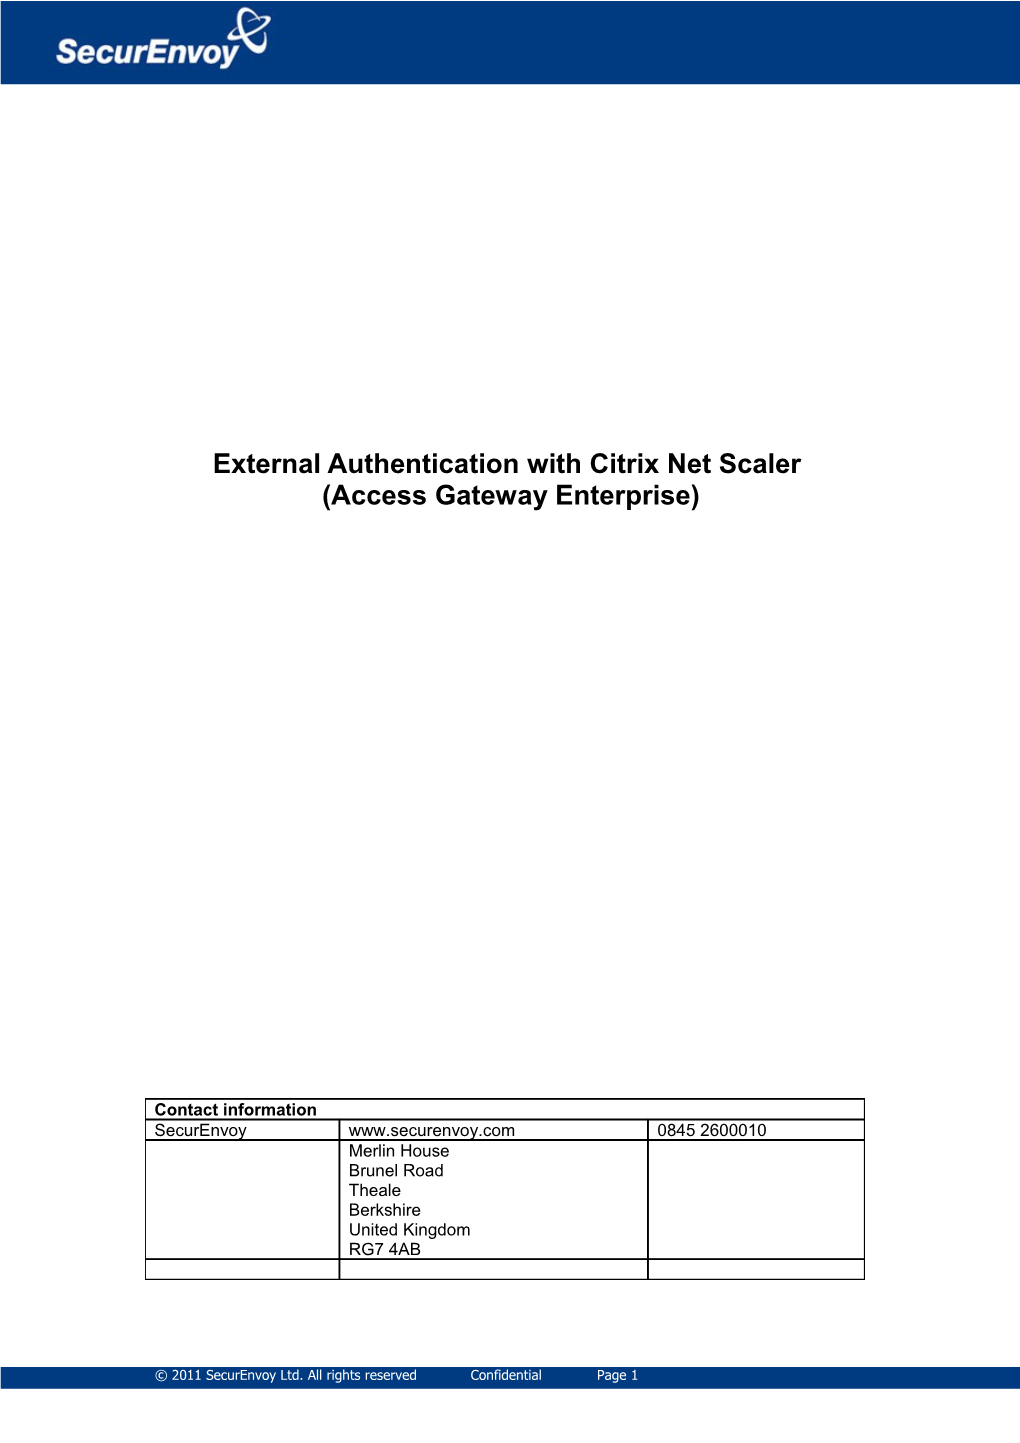 External Authentication with Citrix Net Scaler